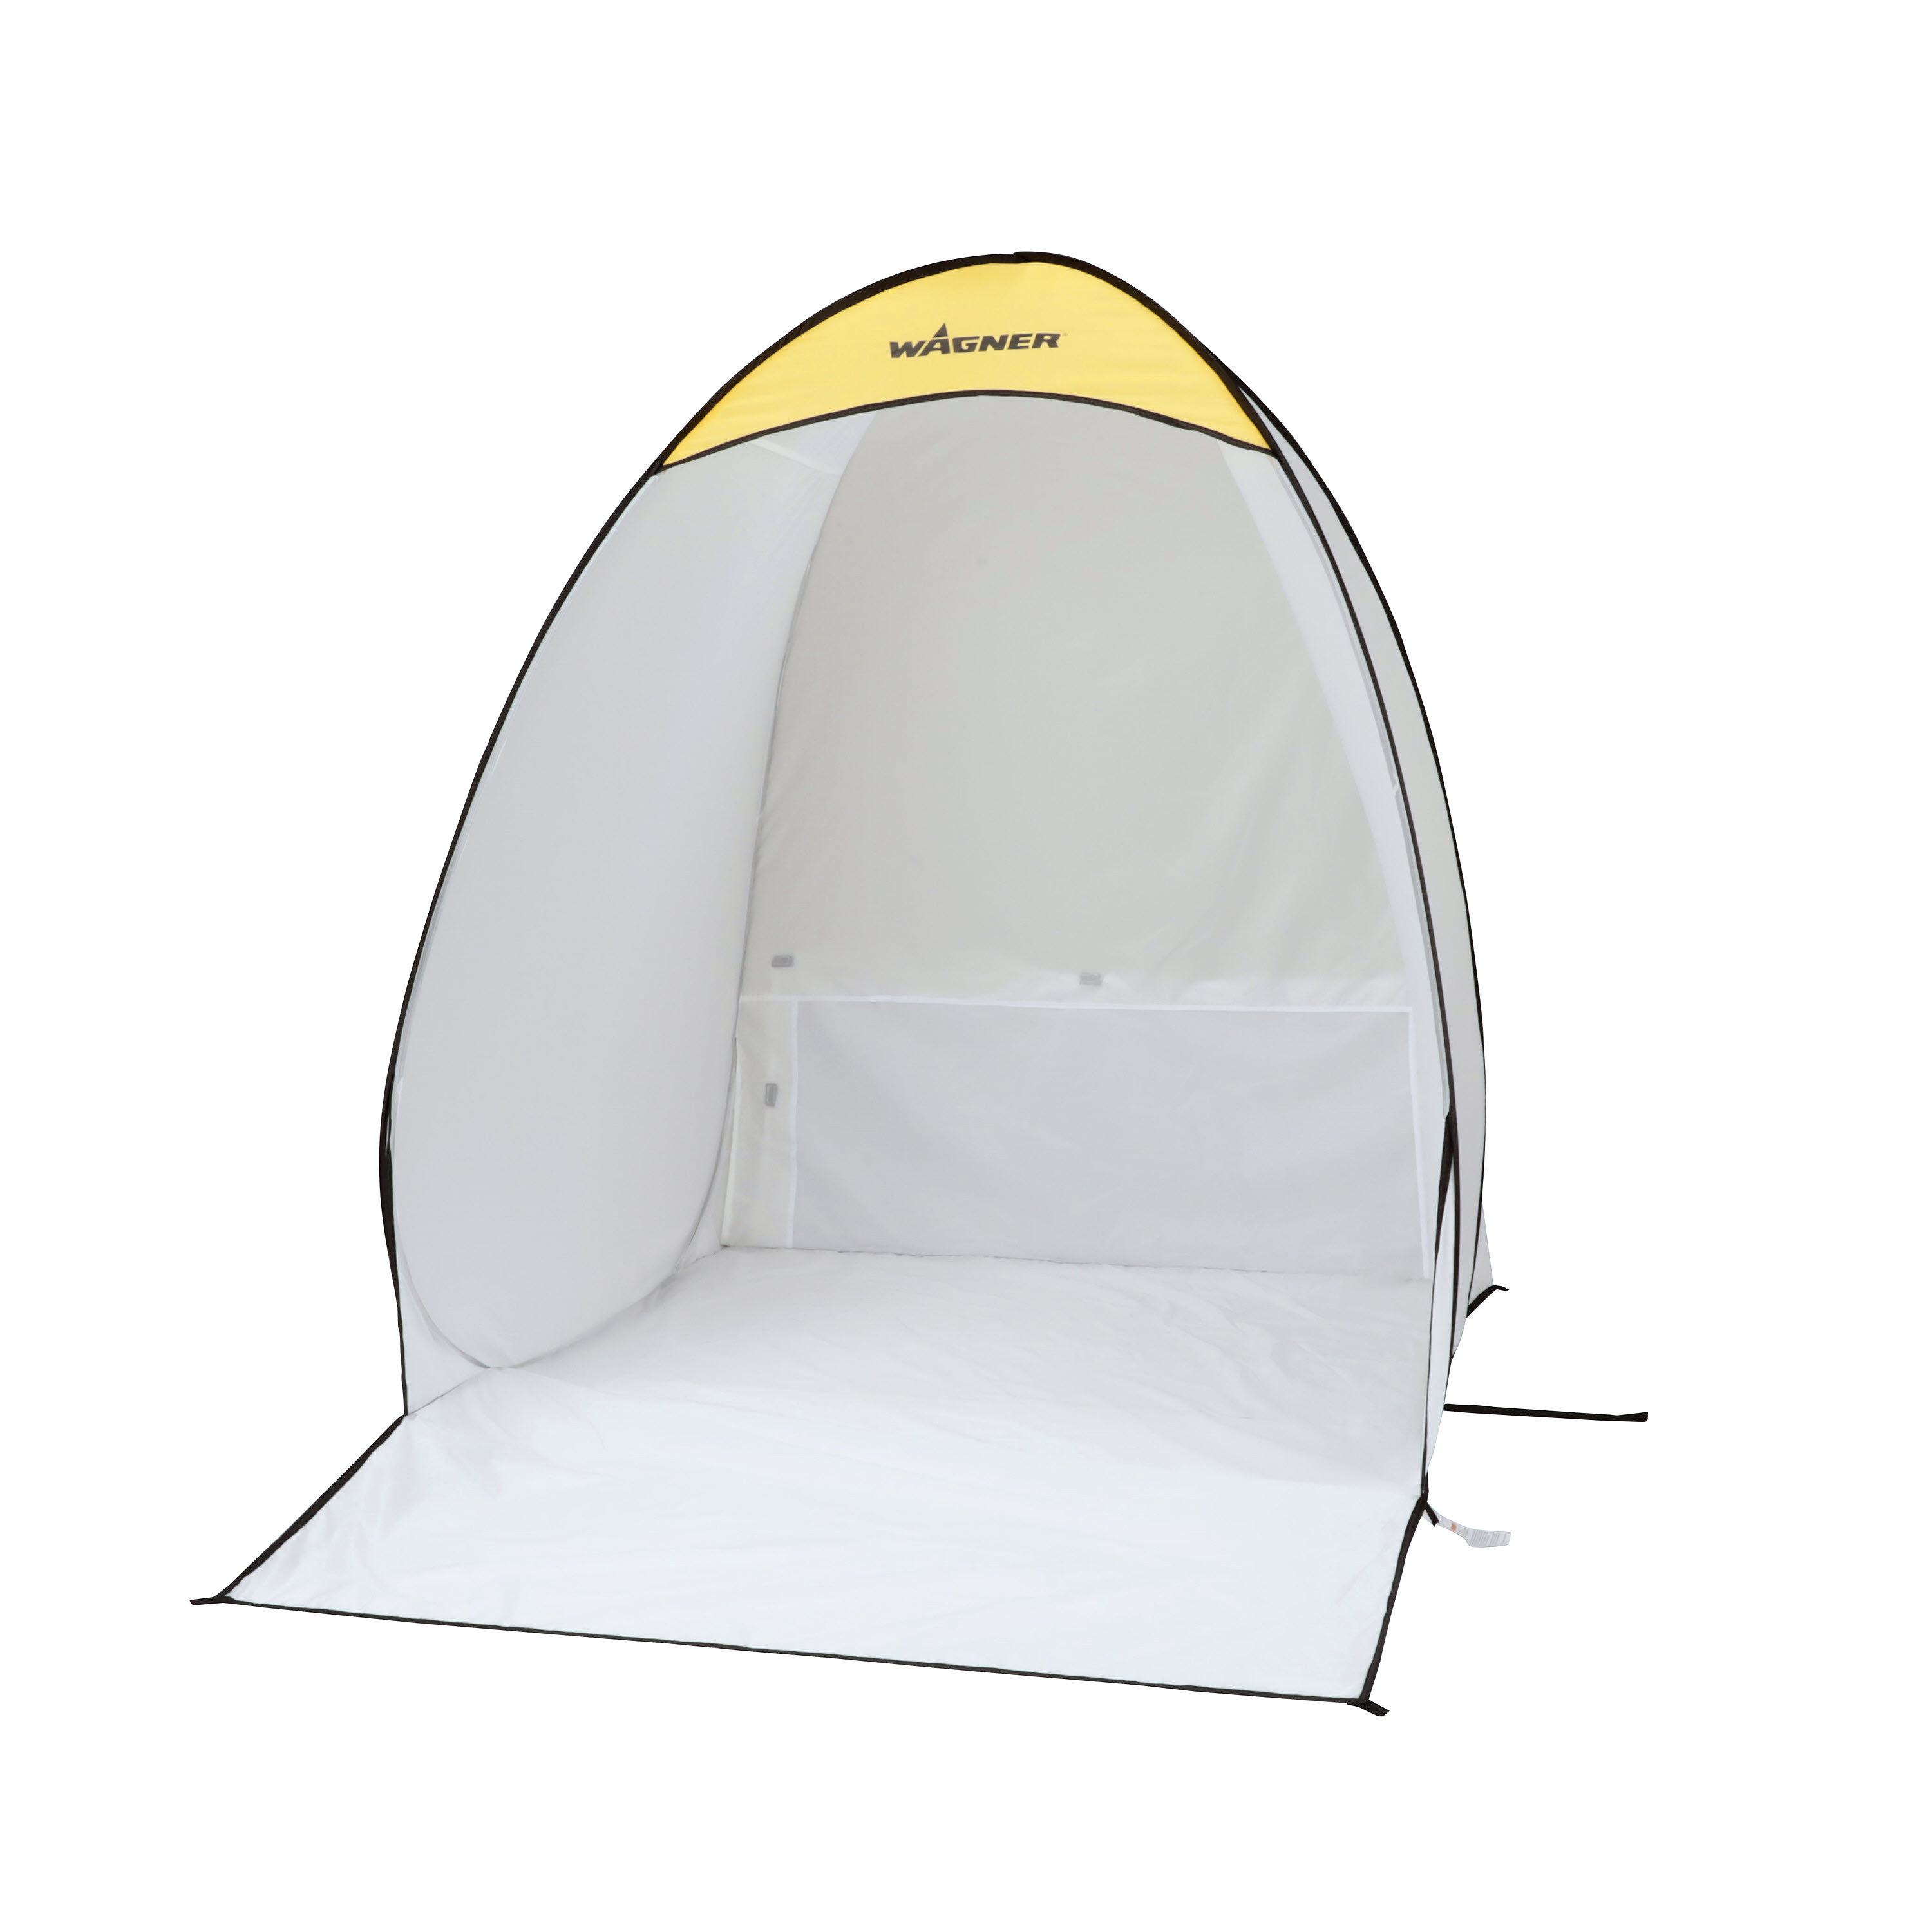 PLANTIONAL Portable Paint Tent for Spray Painting: Medium Spray